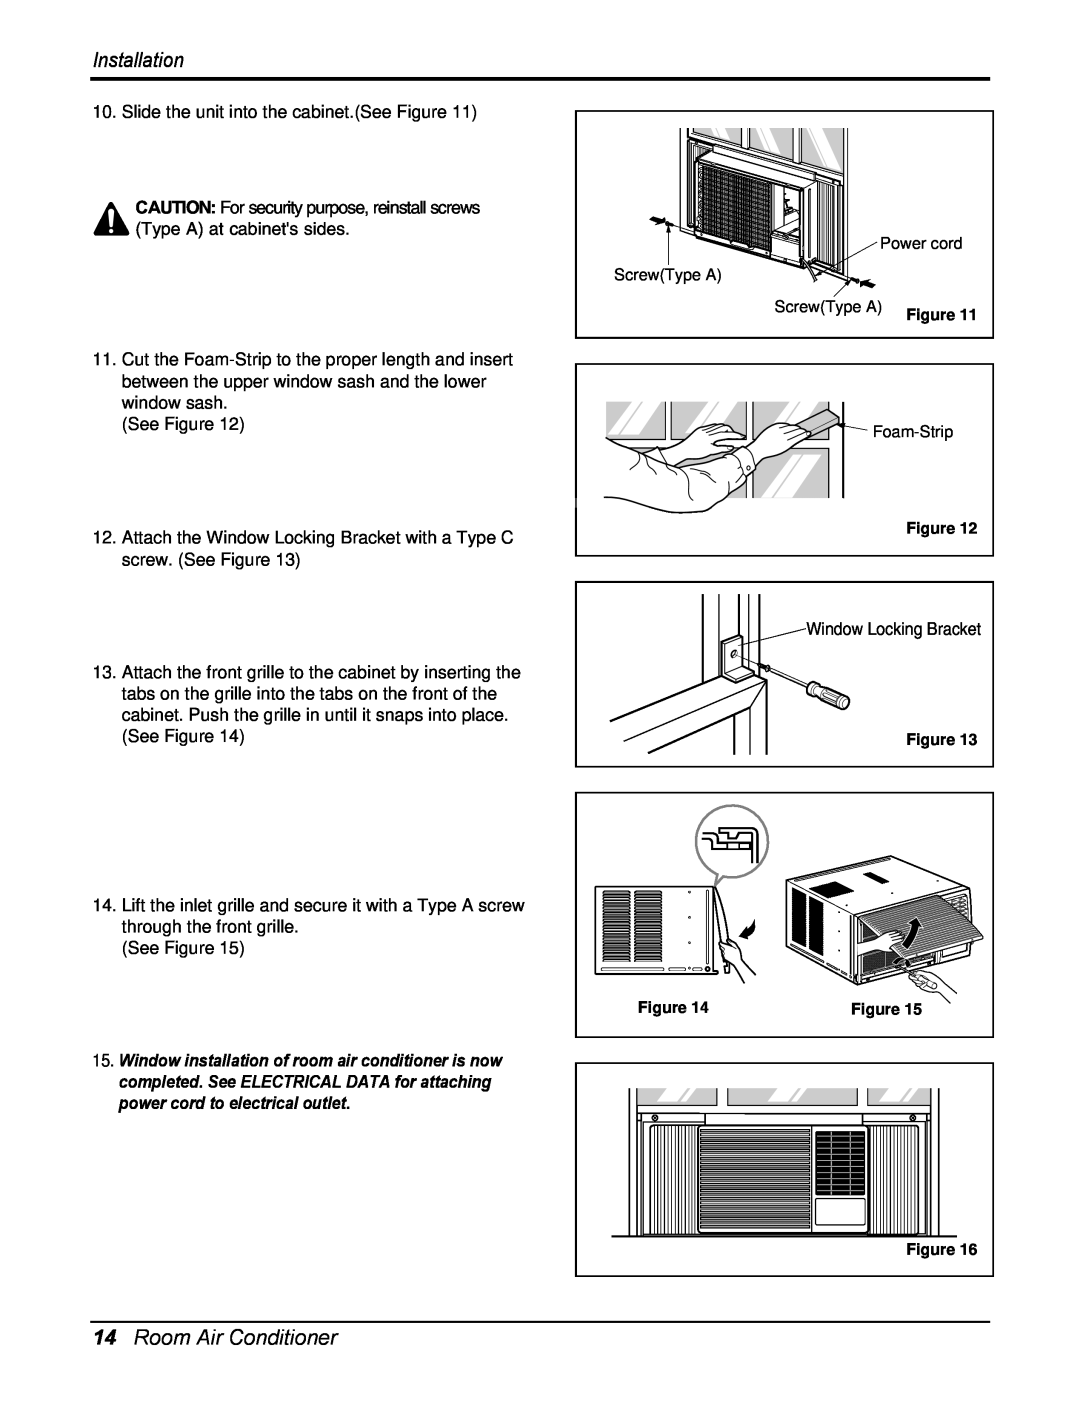 Heat Controller RADS-81B, RAD-101A, RAD-81A manual 14Room Air Conditioner, Installation 